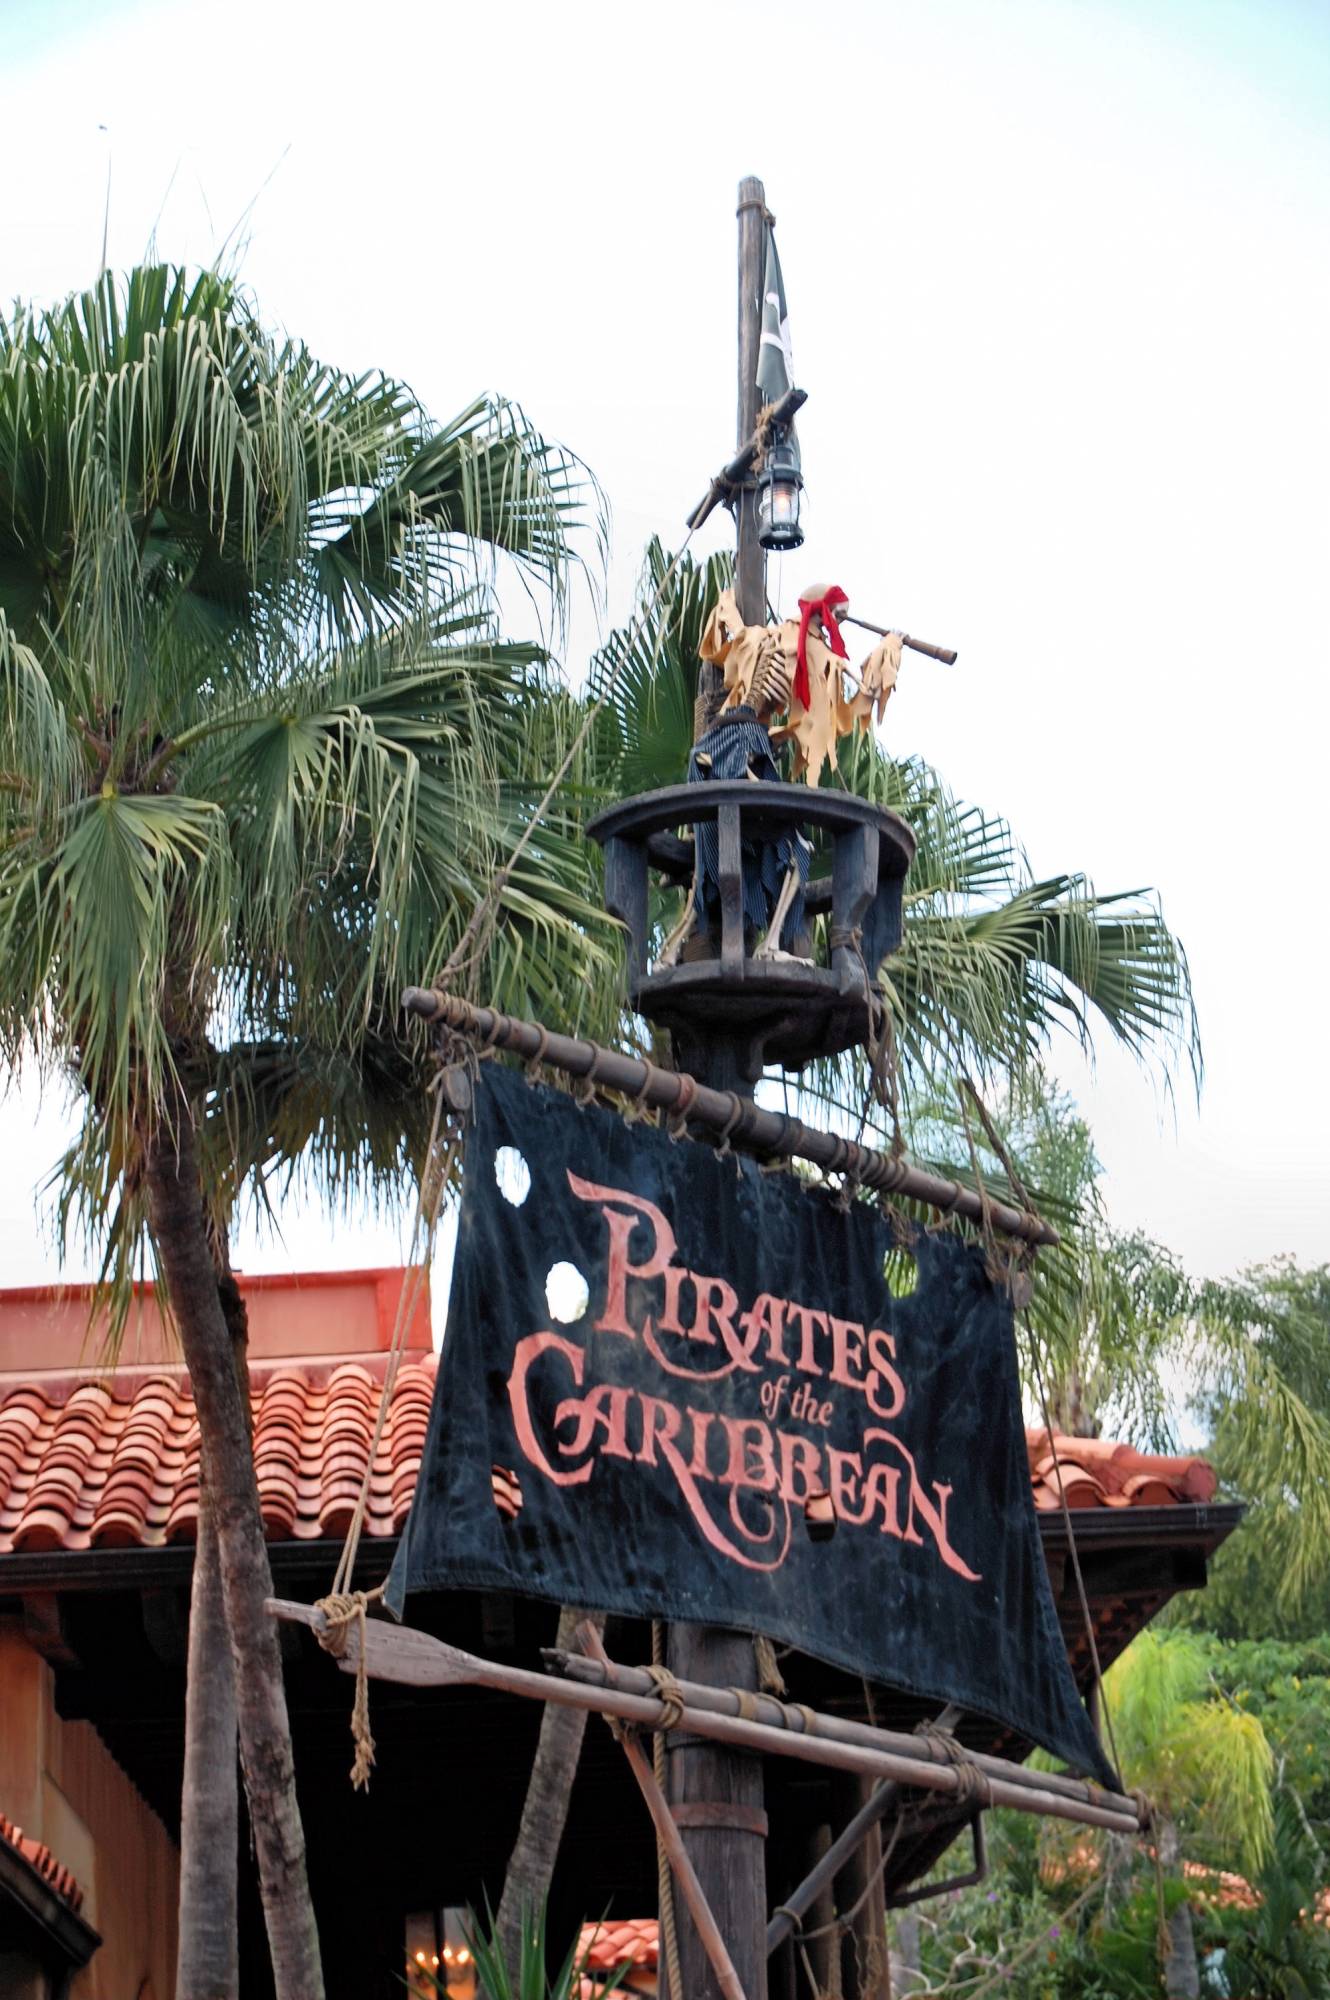 Magic Kingdom - Pirates of the Caribbean